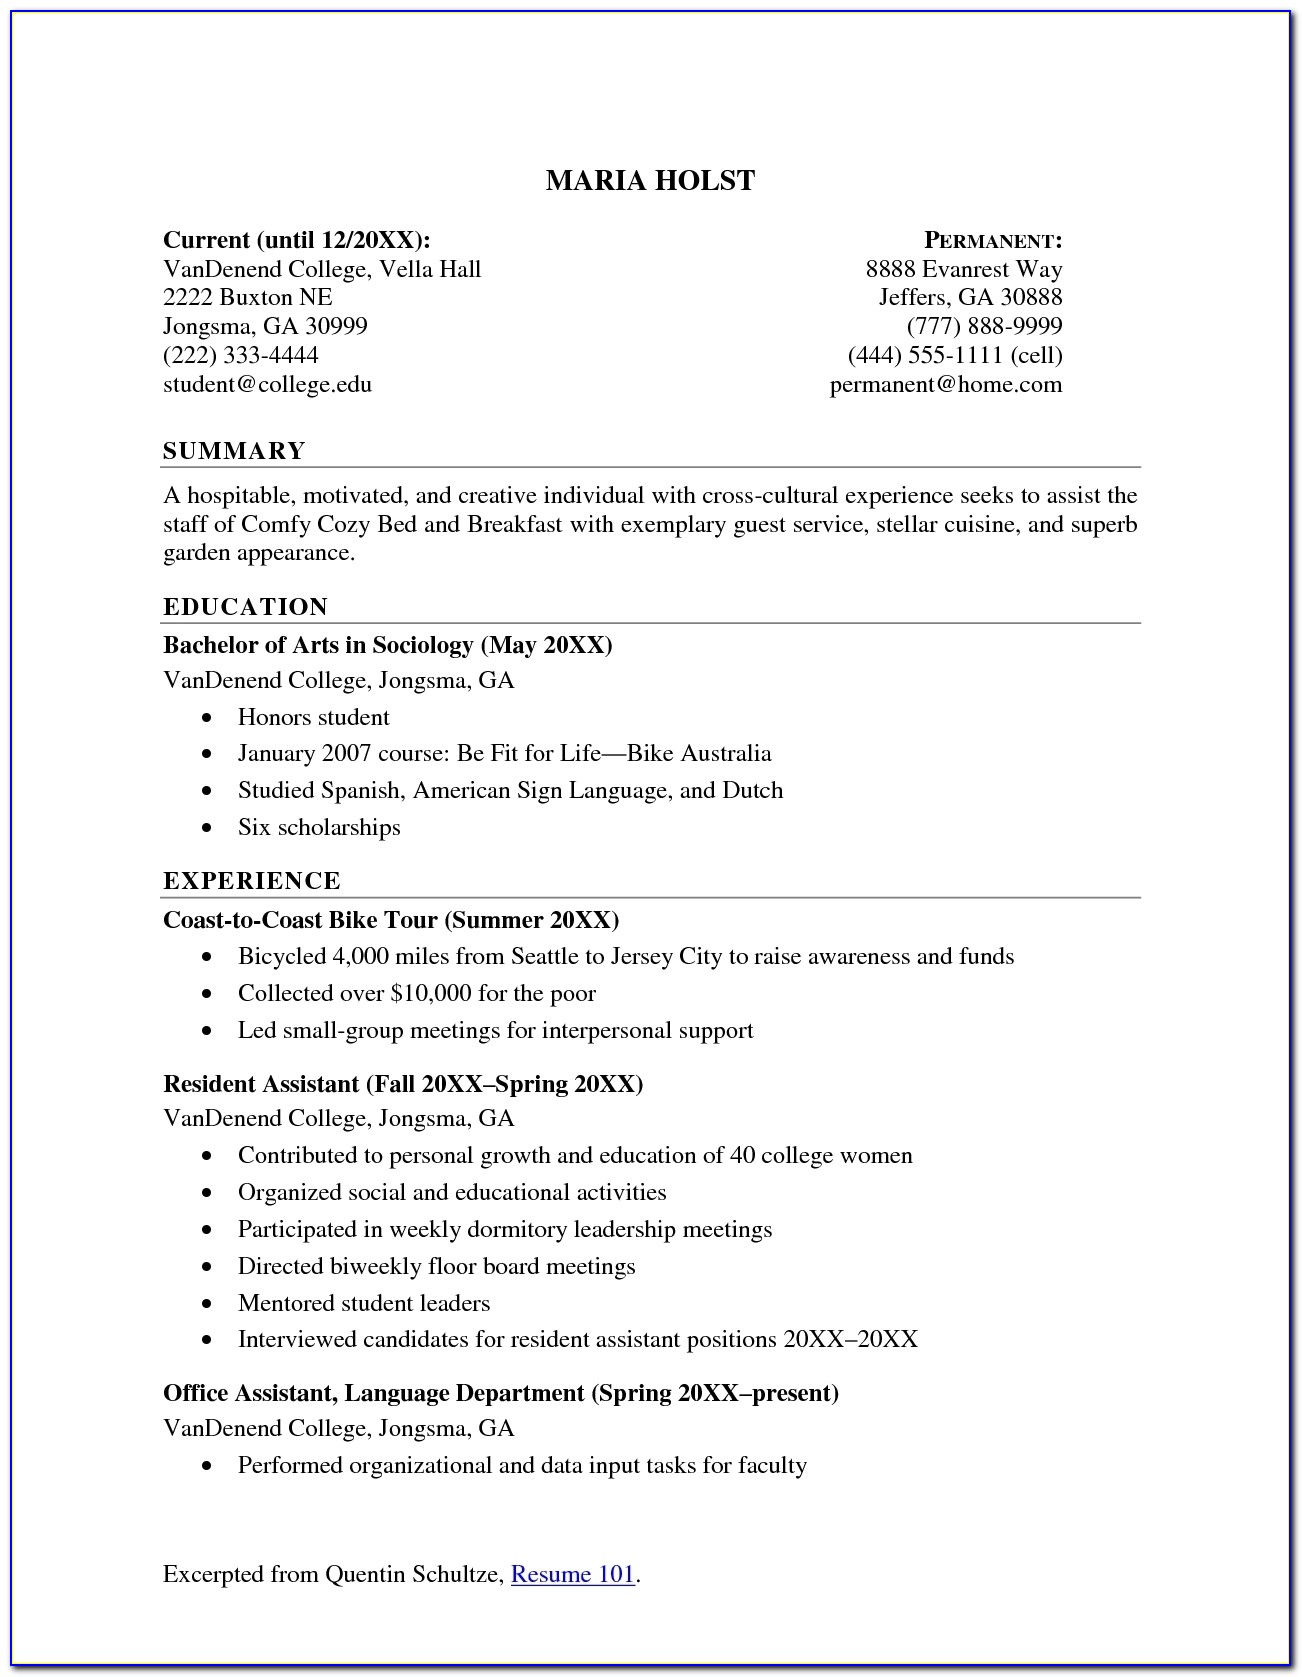 Current Resume Resume Templates Regarding Current Resume Examples